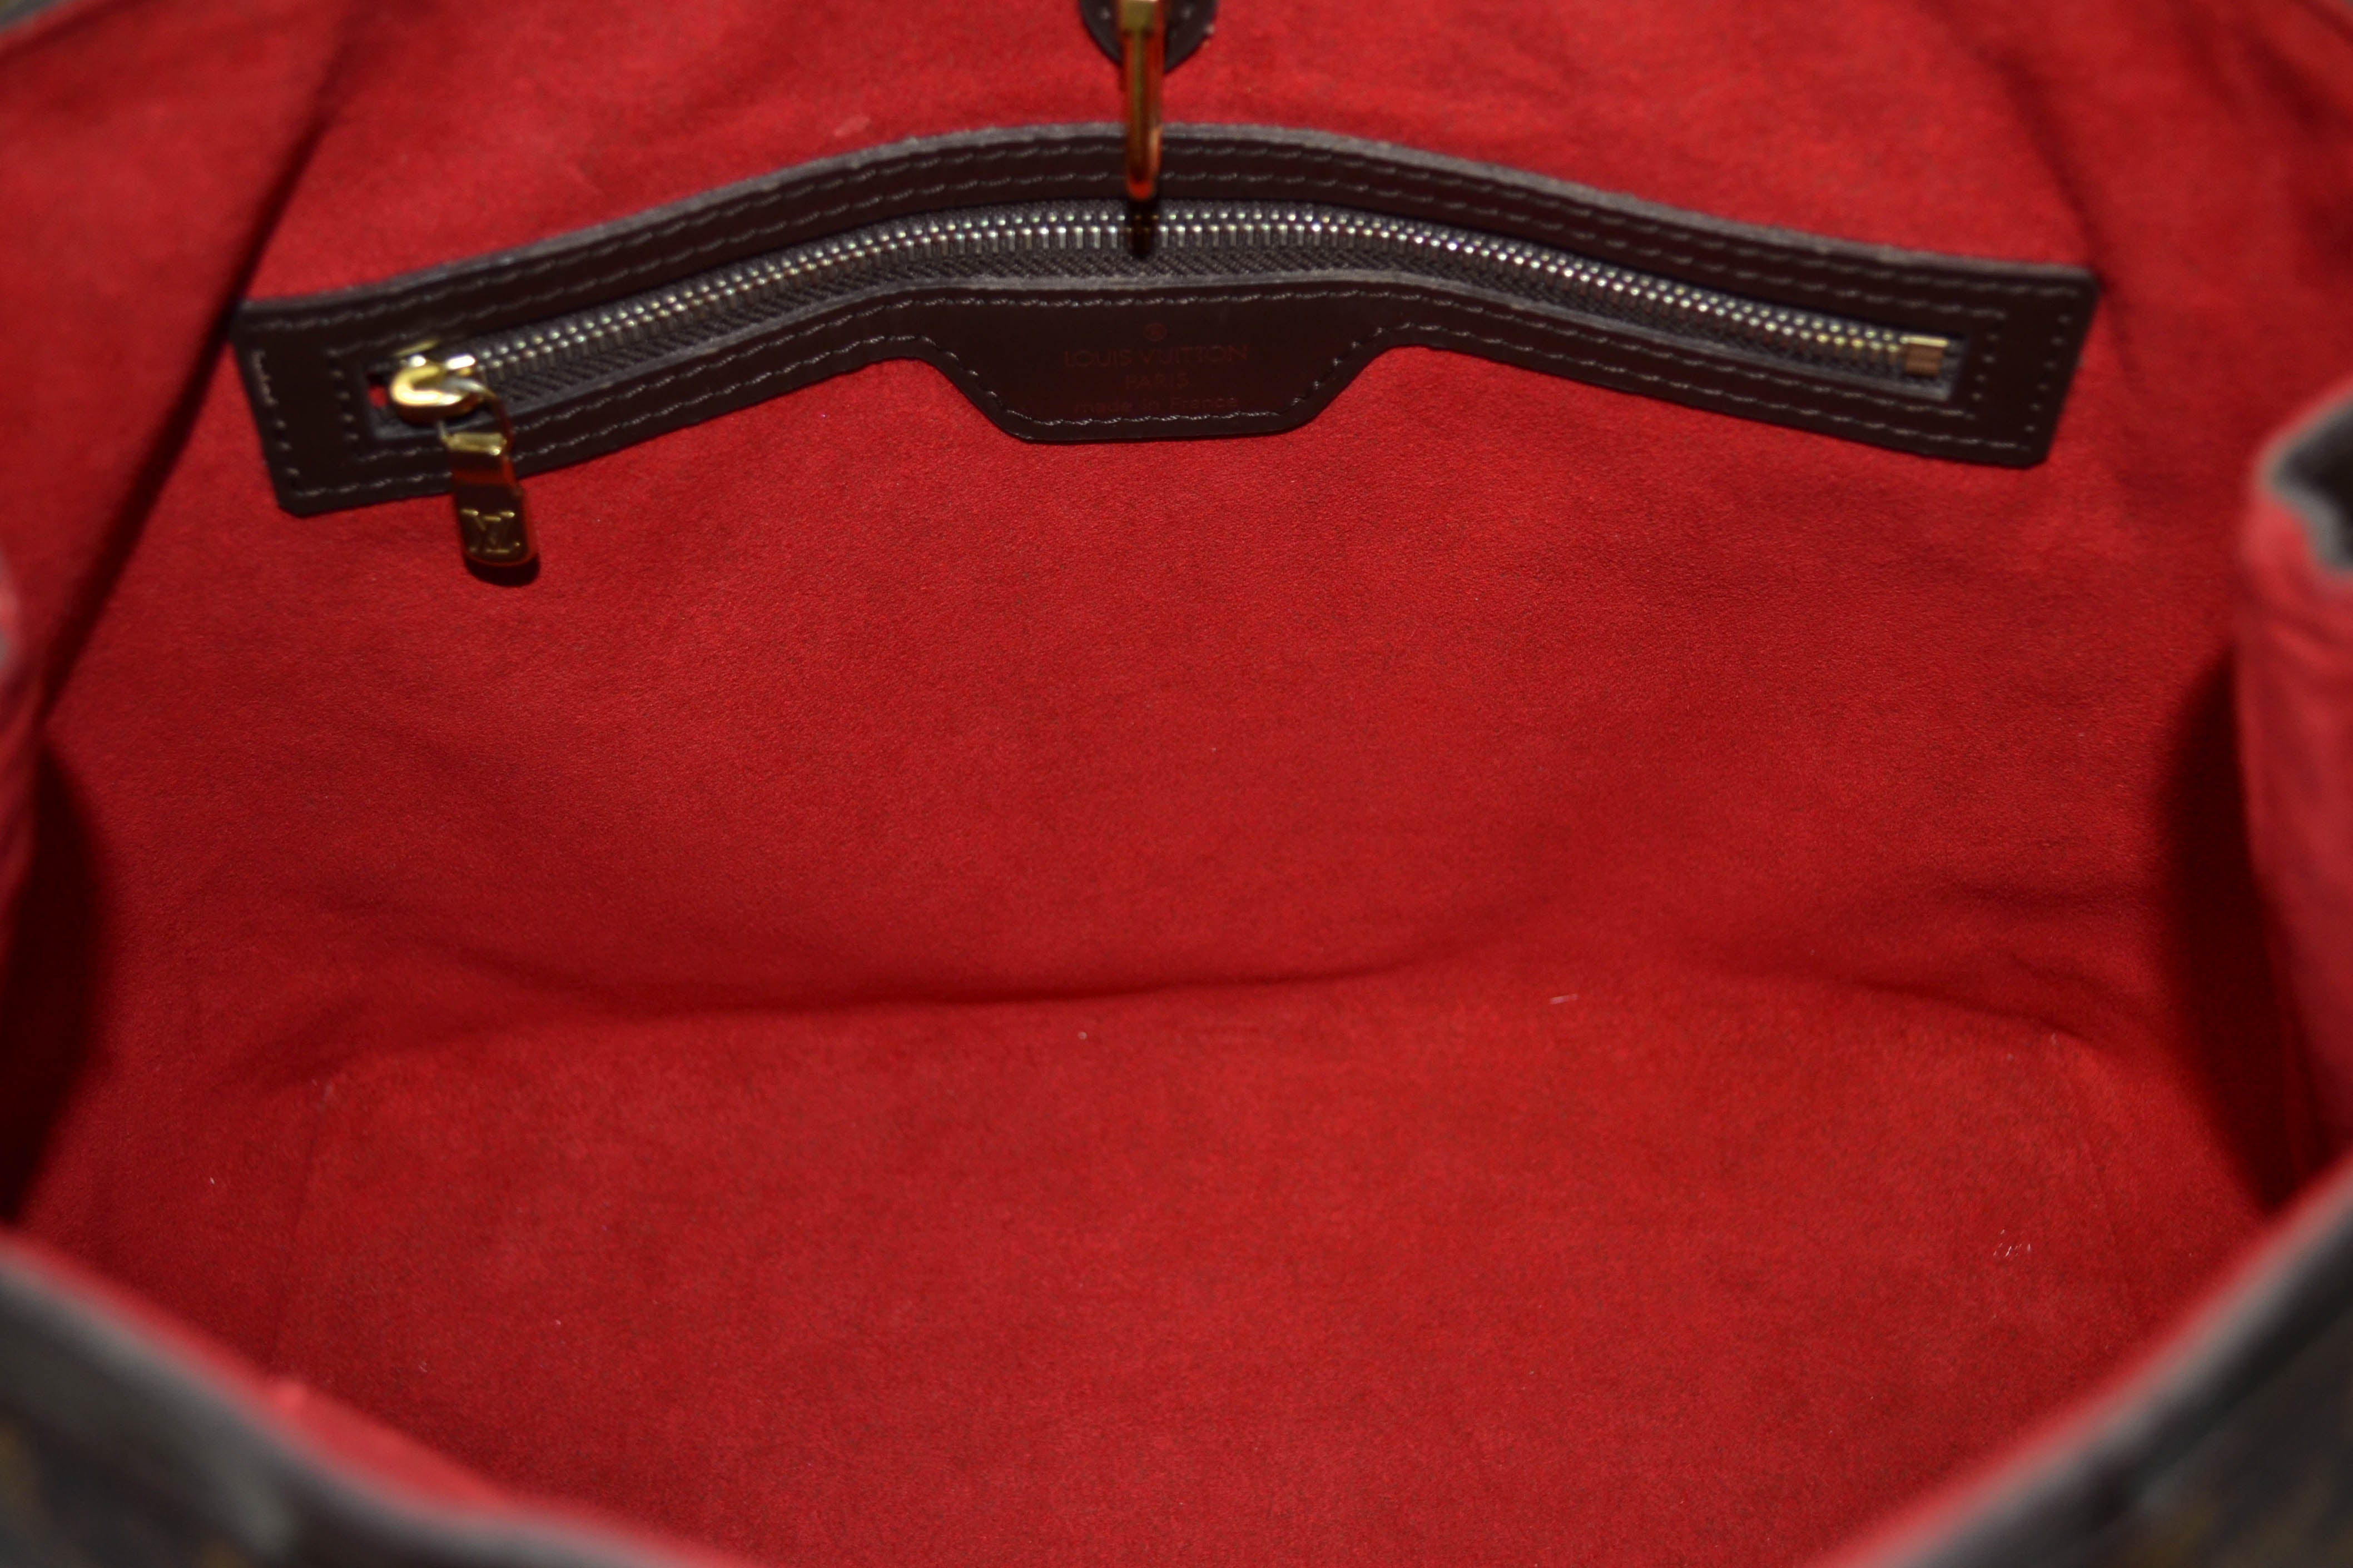 Vintage Louis Vuitton Damier Ebene Hampstead PM Handbag